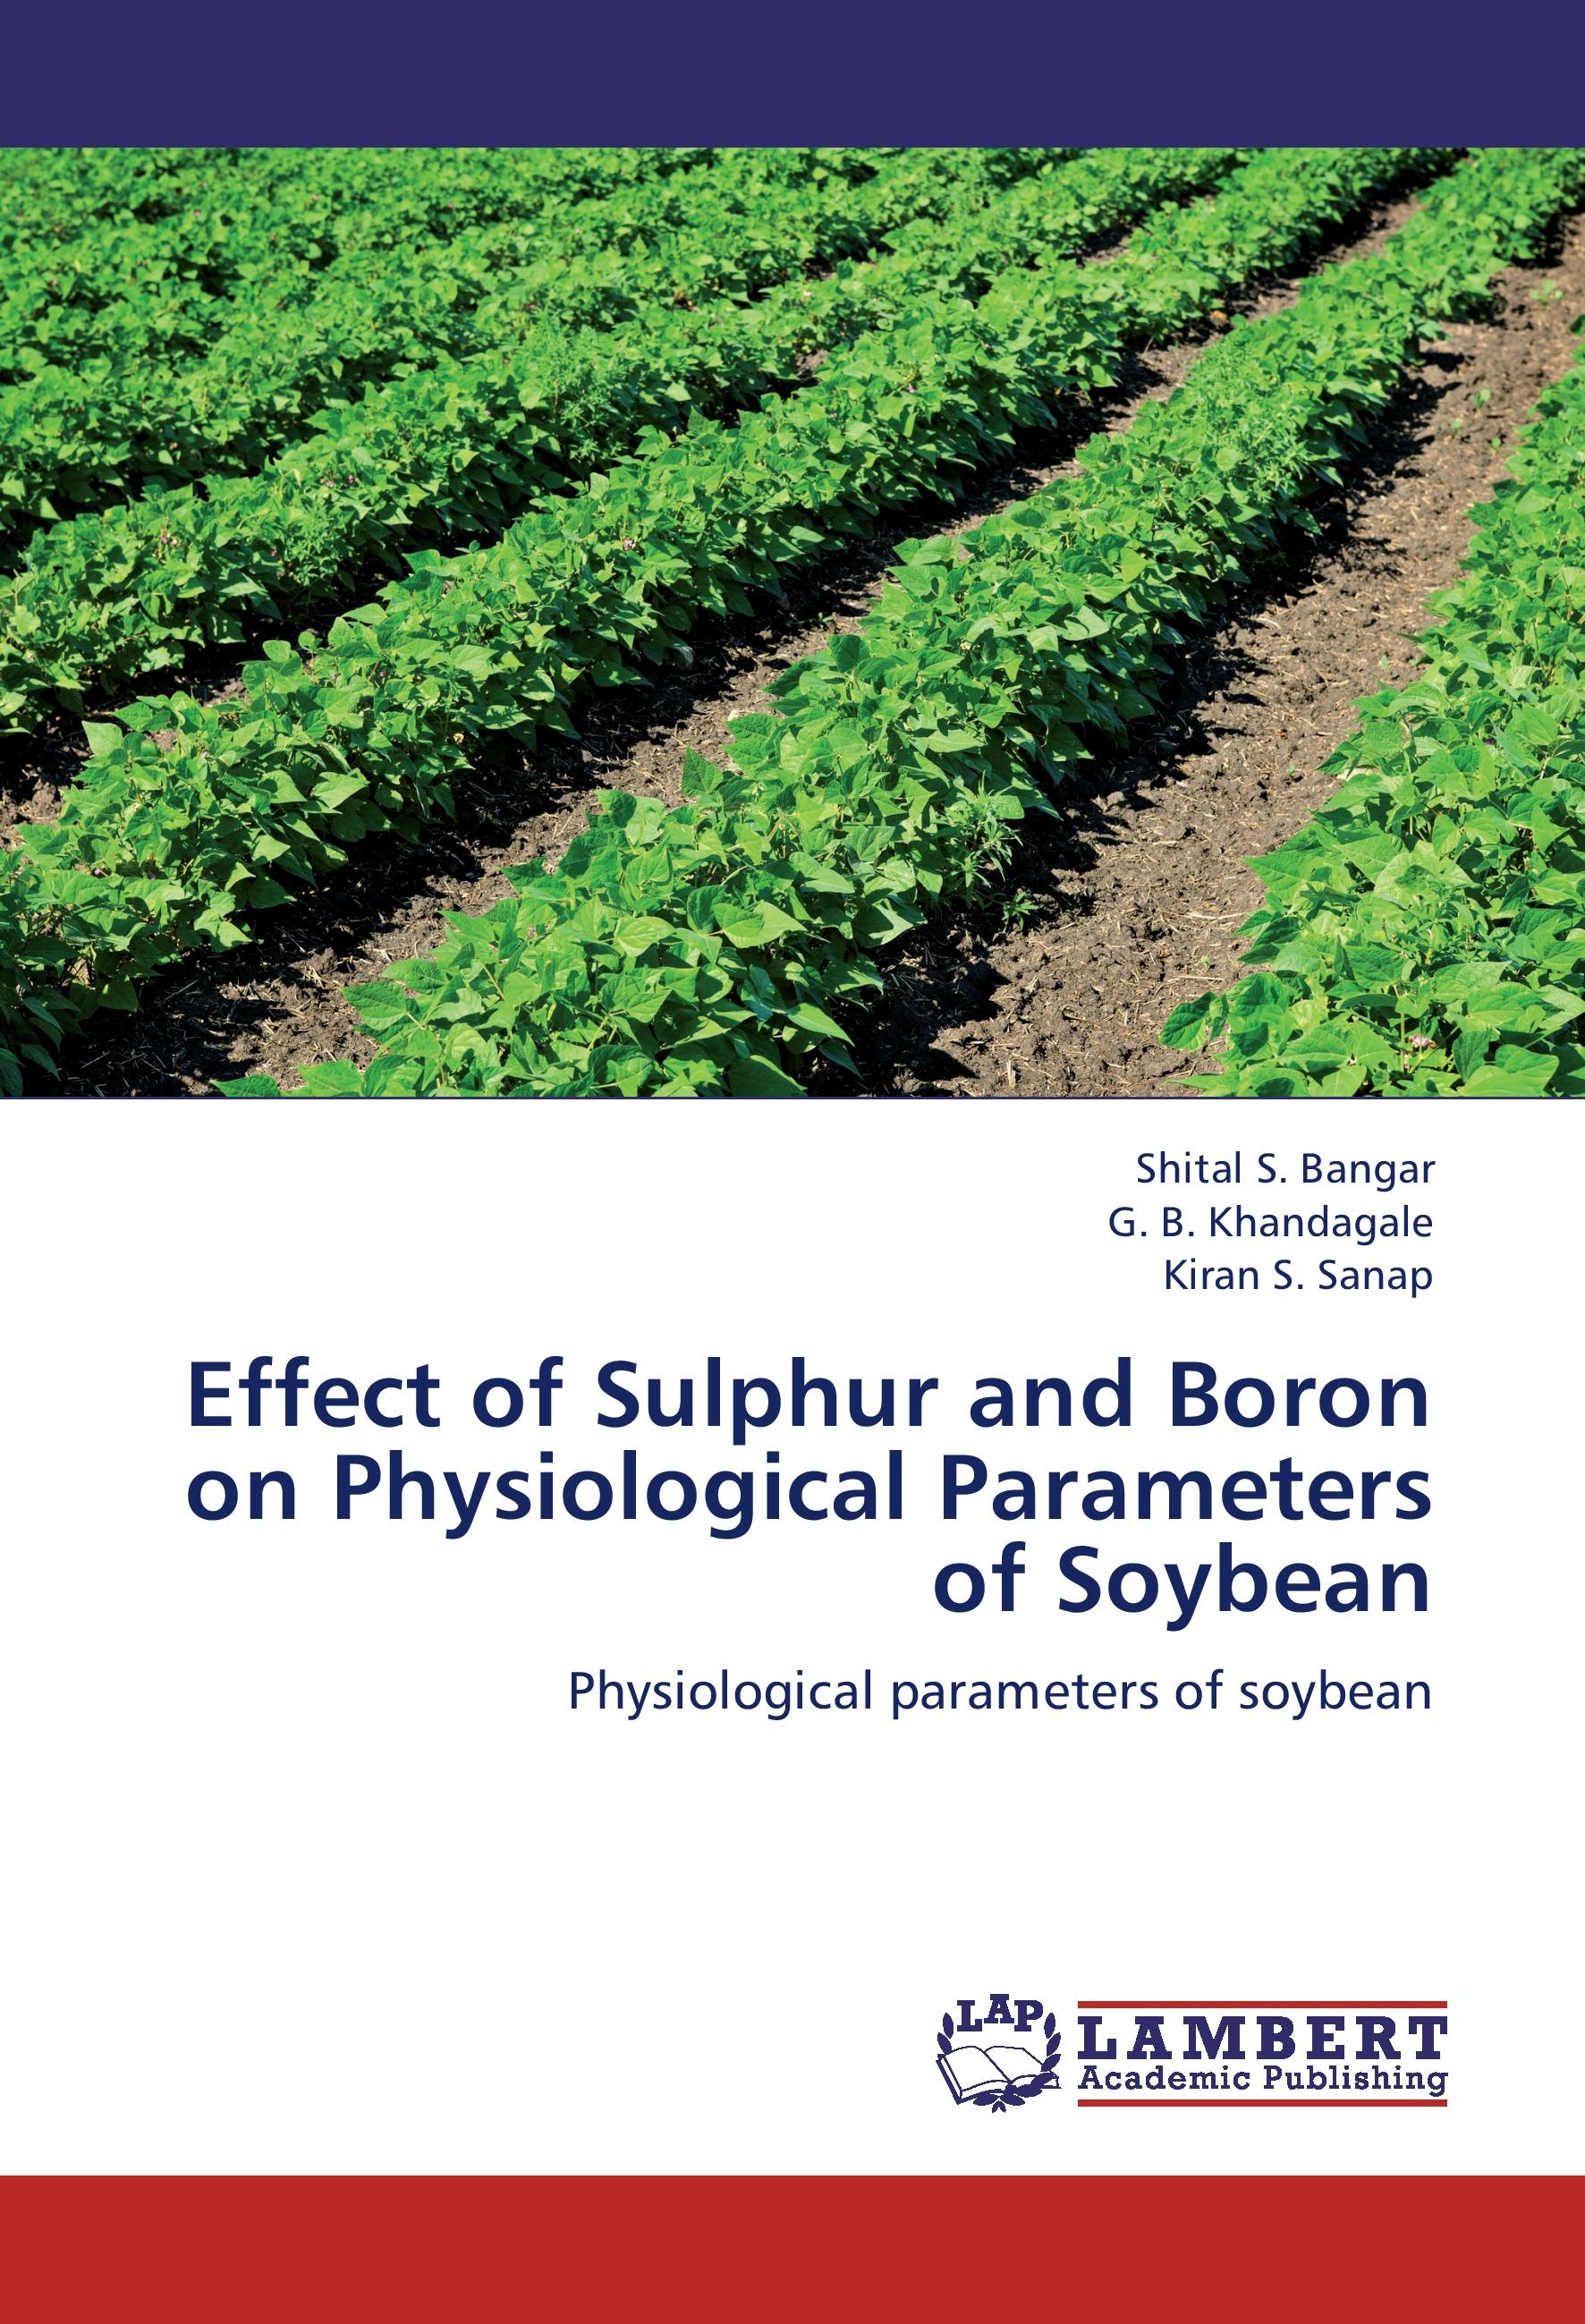 Effect of Sulphur and Boron on Physiological Parameters of Soybean - Shital S. Bangar G. B. Khandagale Kiran S. Sanap